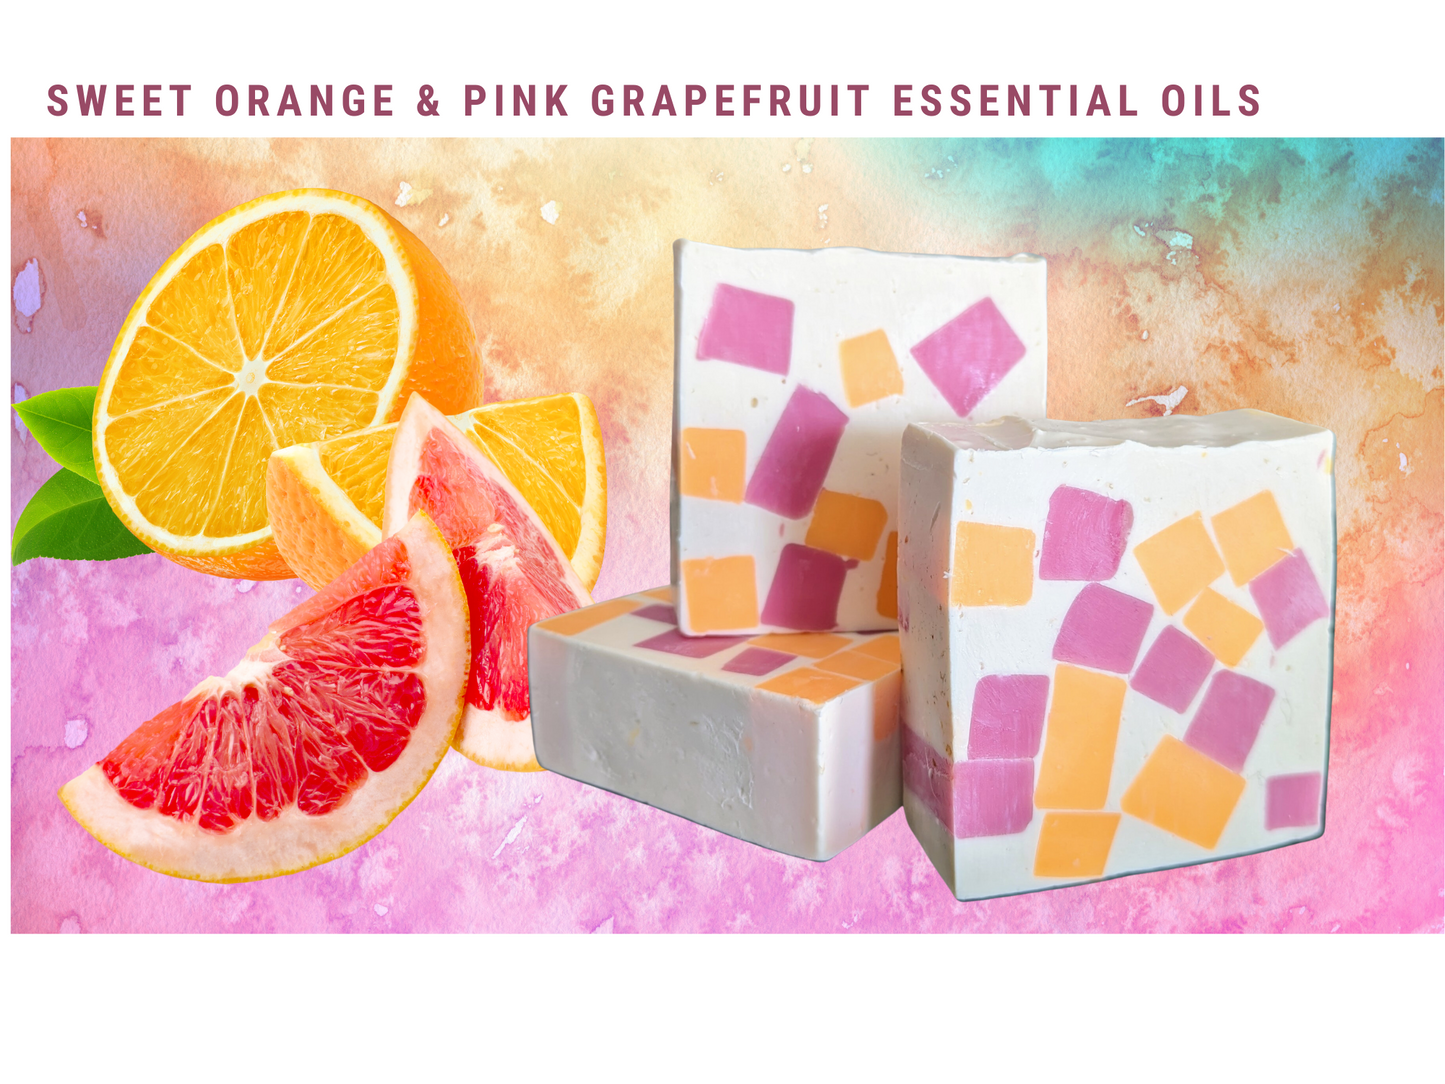 Orange & Pink Grapefruit Essential Oils - Shea Butter